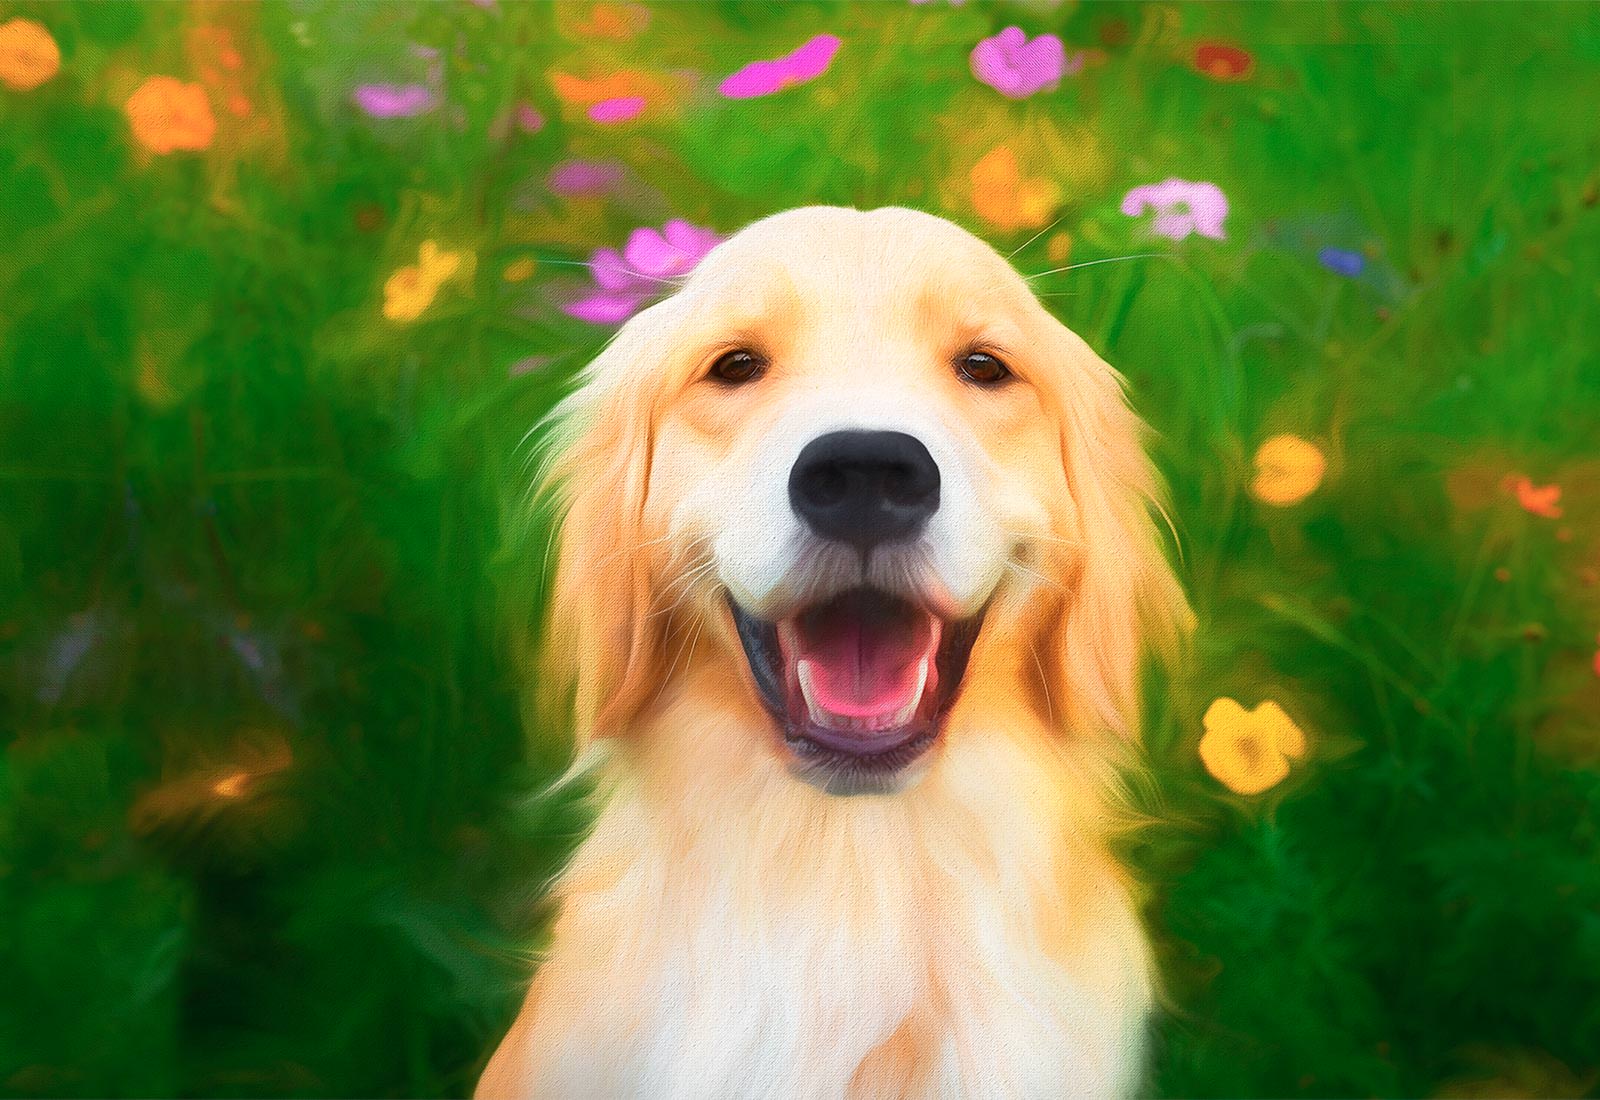 Golden Retriever smiling in the flowers